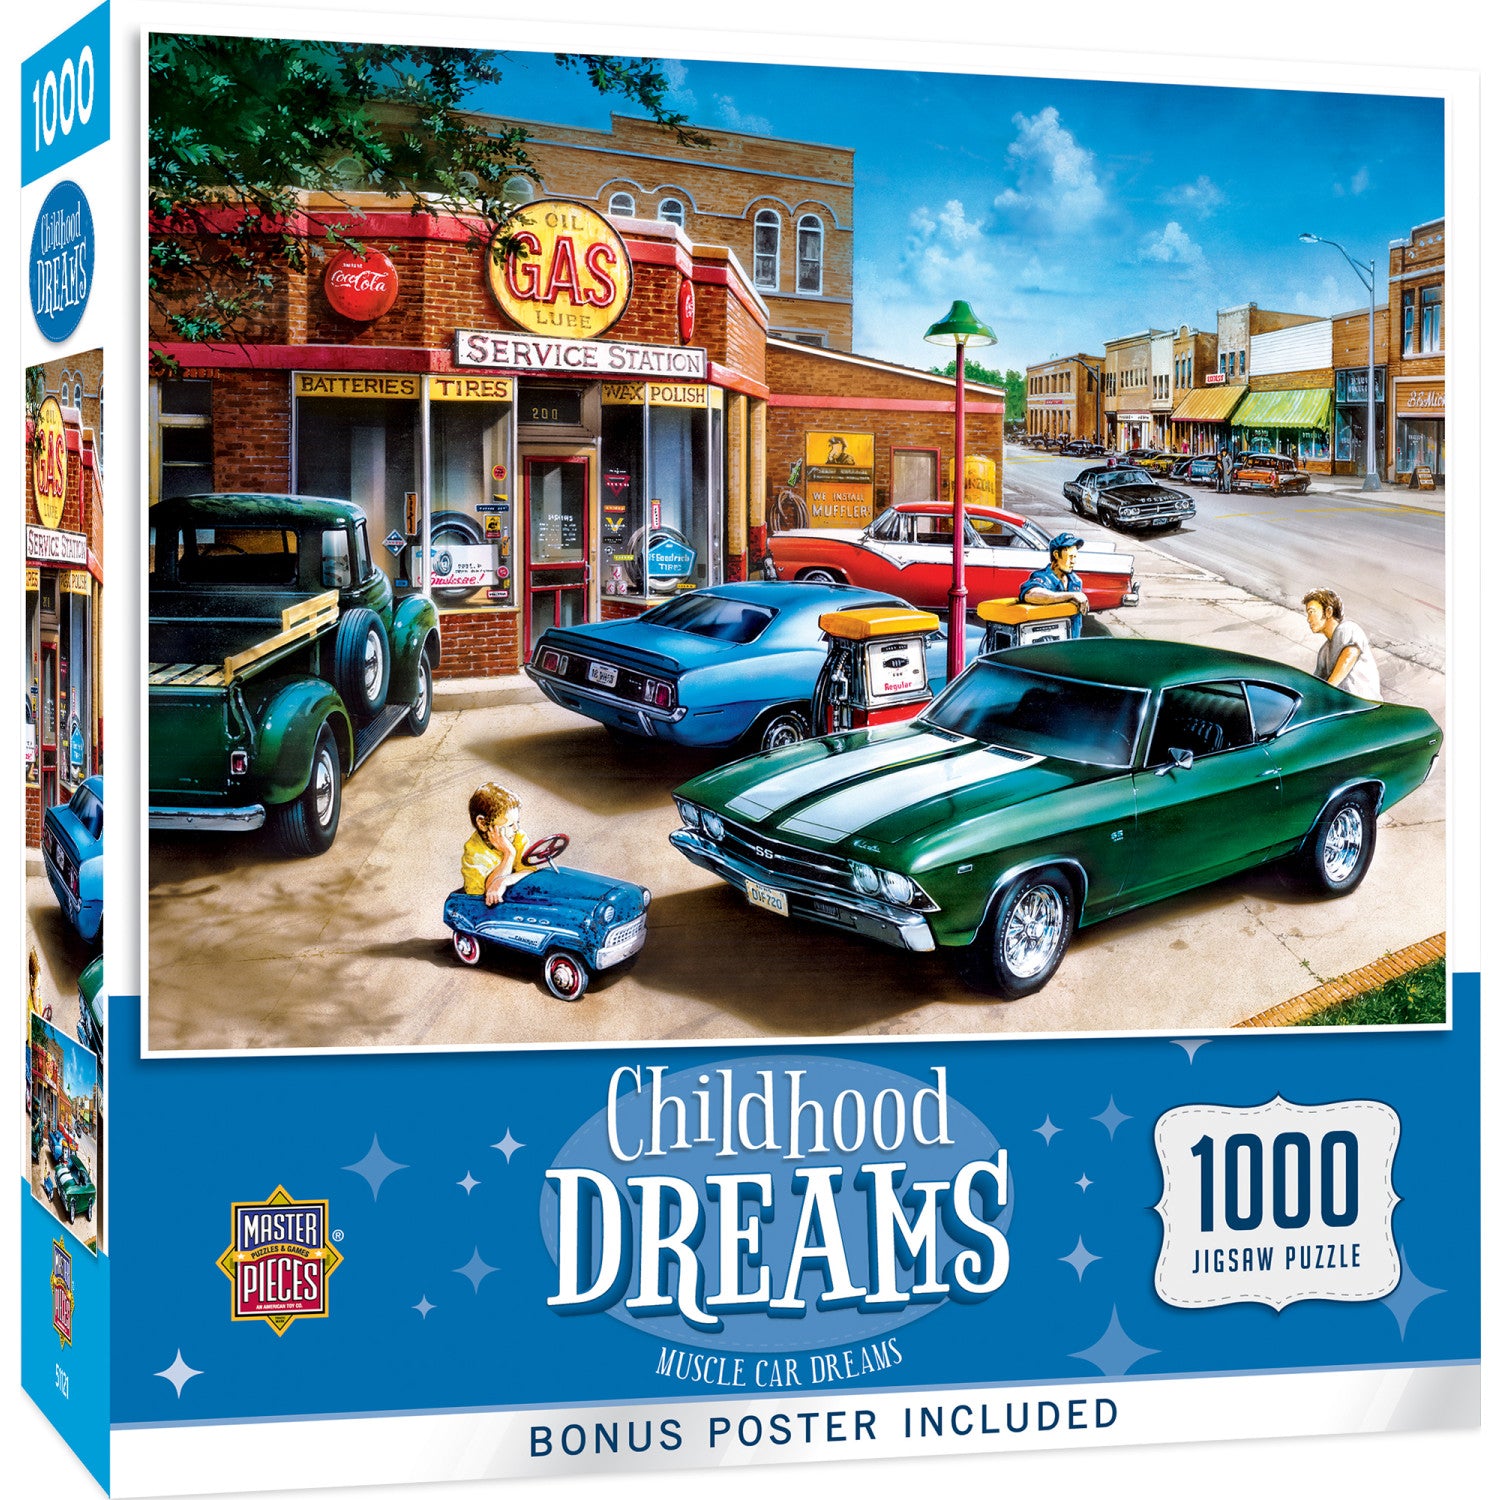 Childhood Dreams - Muscle Car Dreams 1000 Piece Jigsaw Puzzle